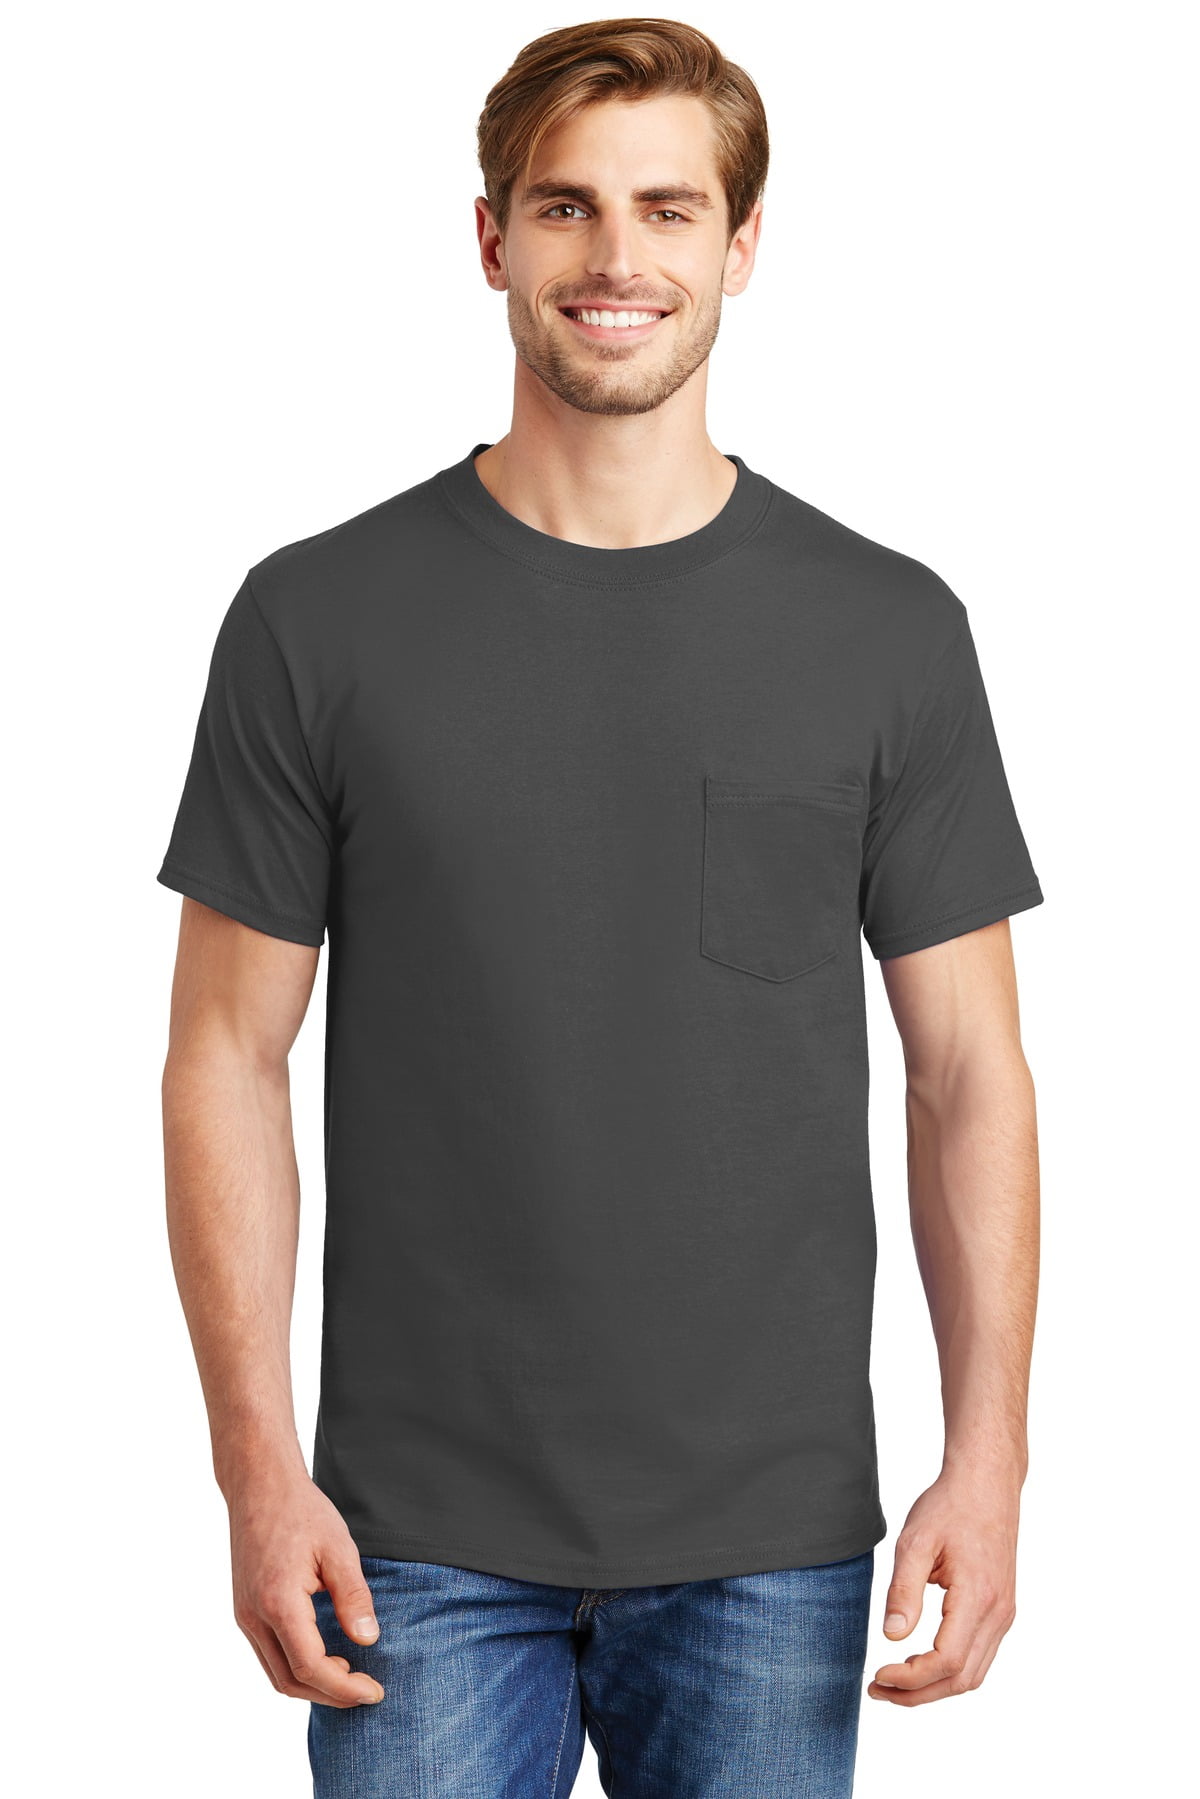 Hanes - Hanes Beefy-T 100% Cotton T-Shirt with Pocket - Walmart.com ...